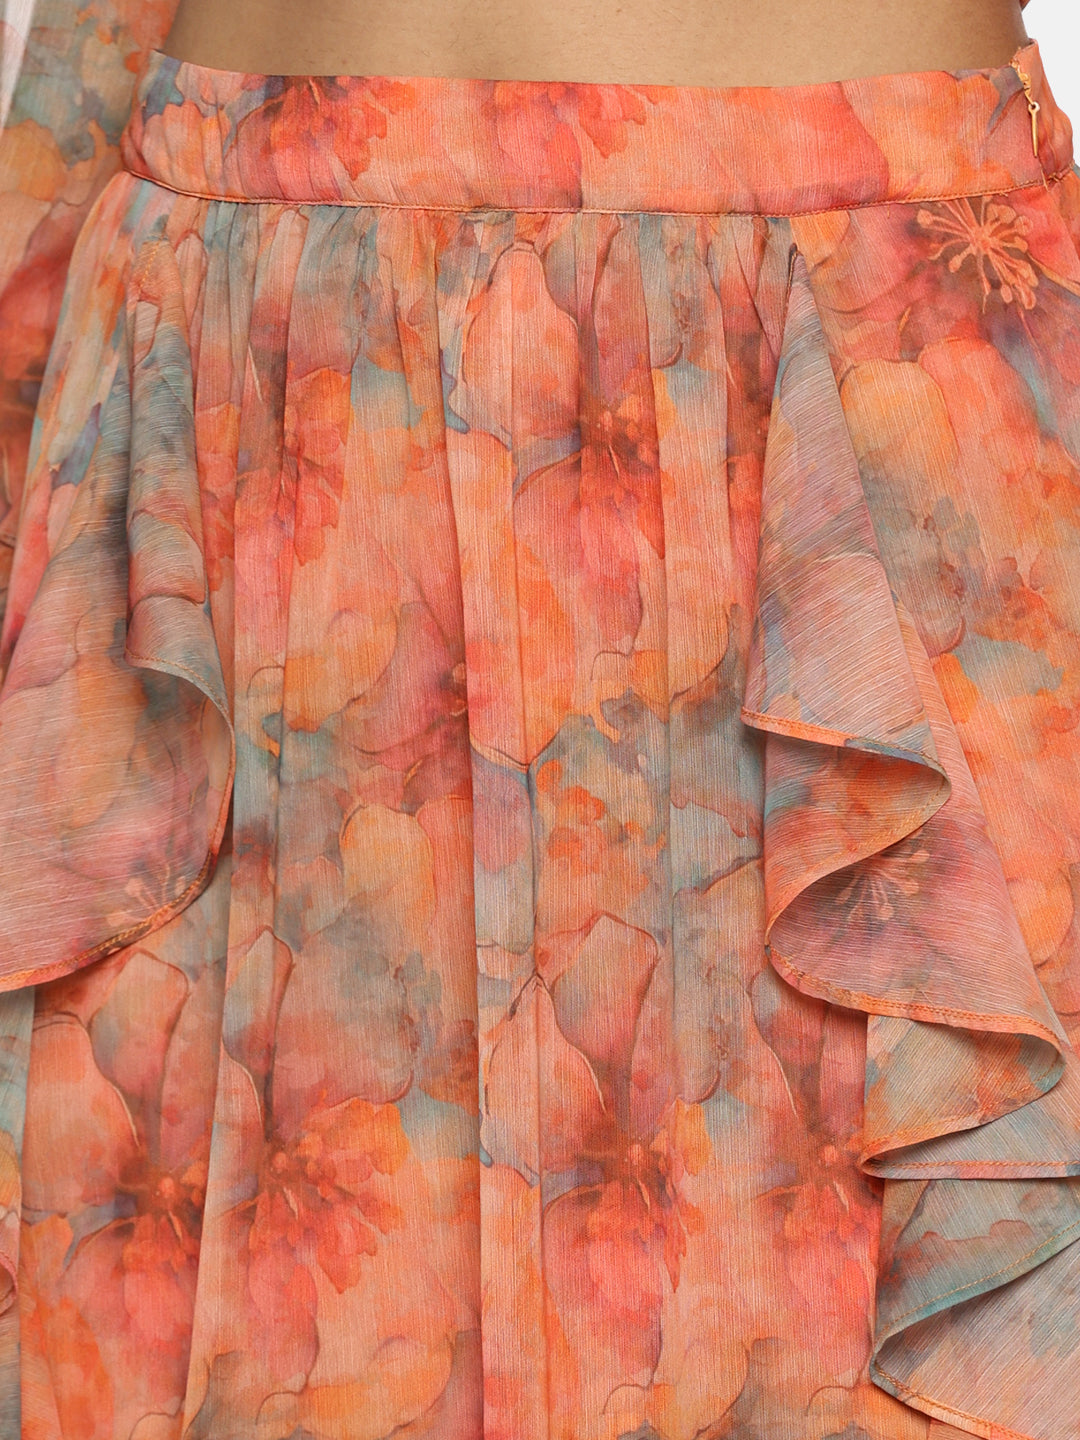 IS.U Floral Orange Flare Detail Maxi Skirt